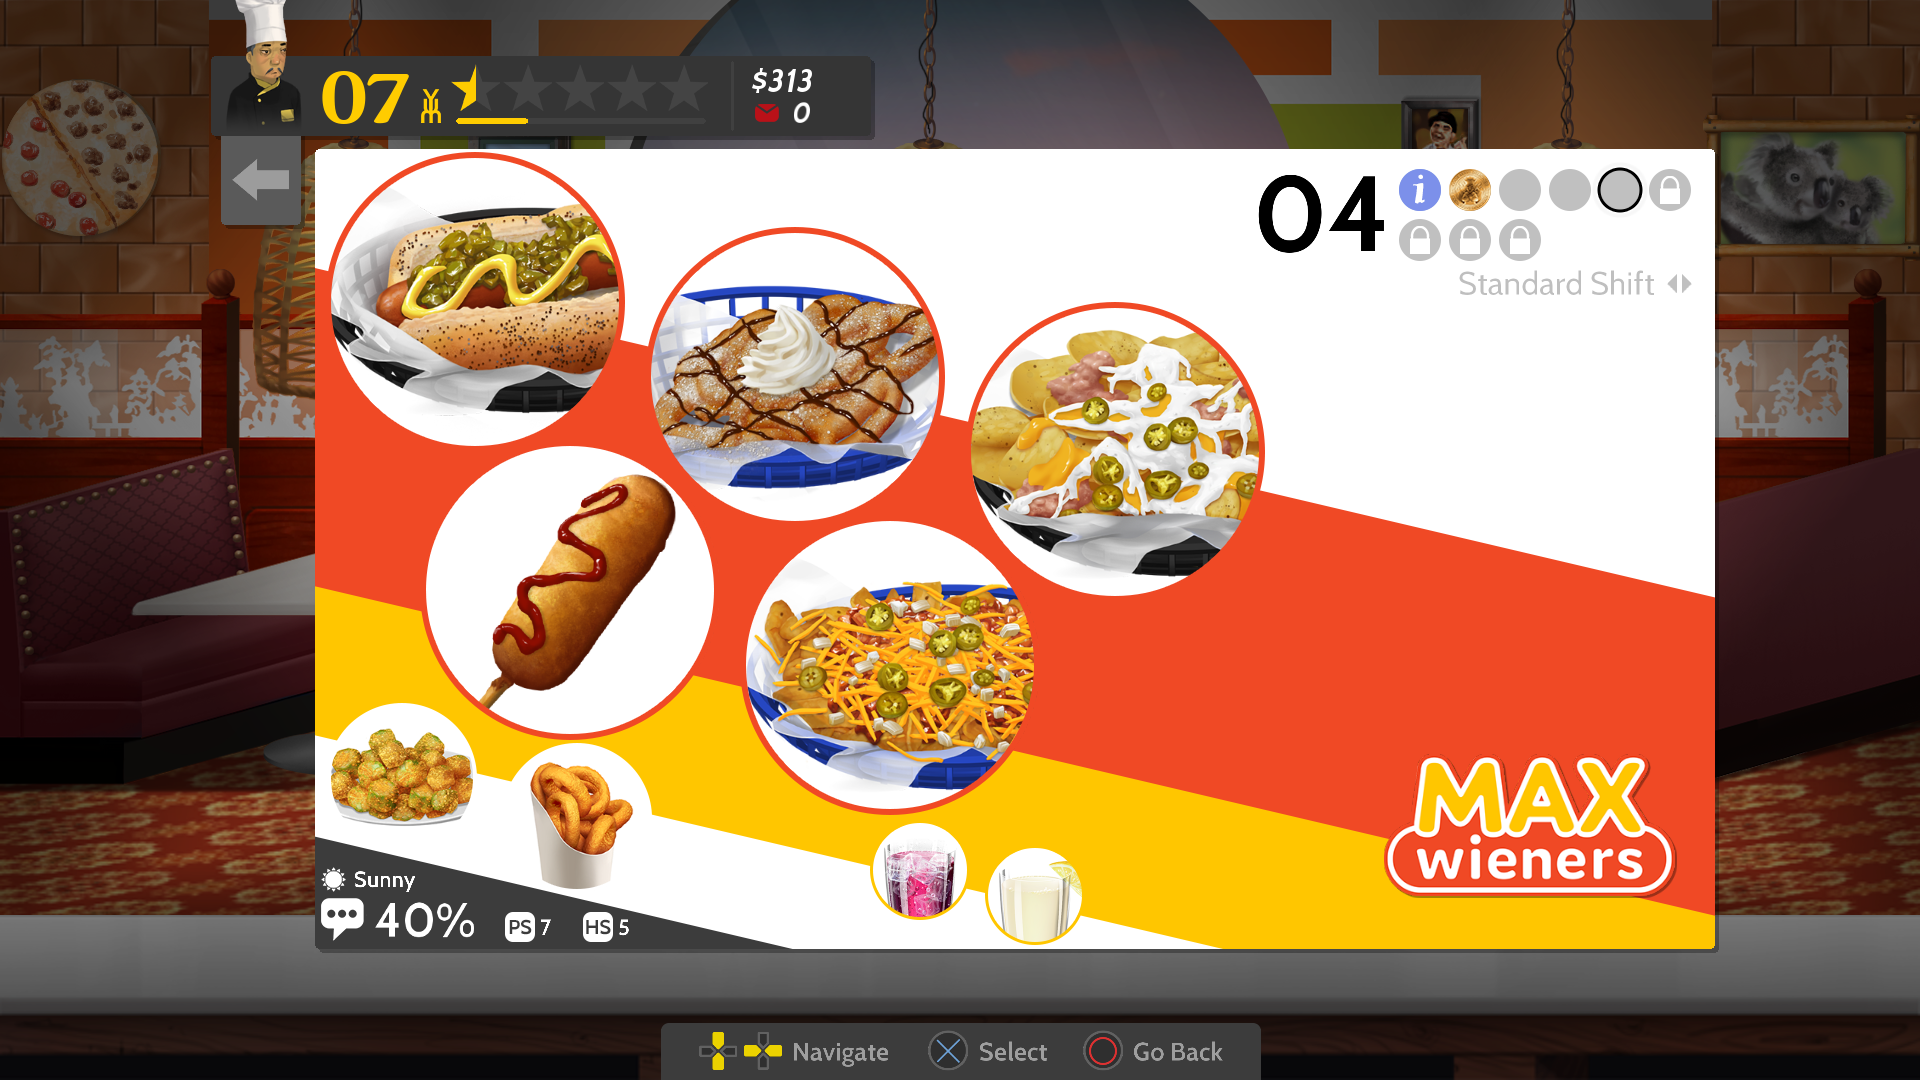 Buy Cook, Serve, Delicious! 2!! - Microsoft Store en-IL